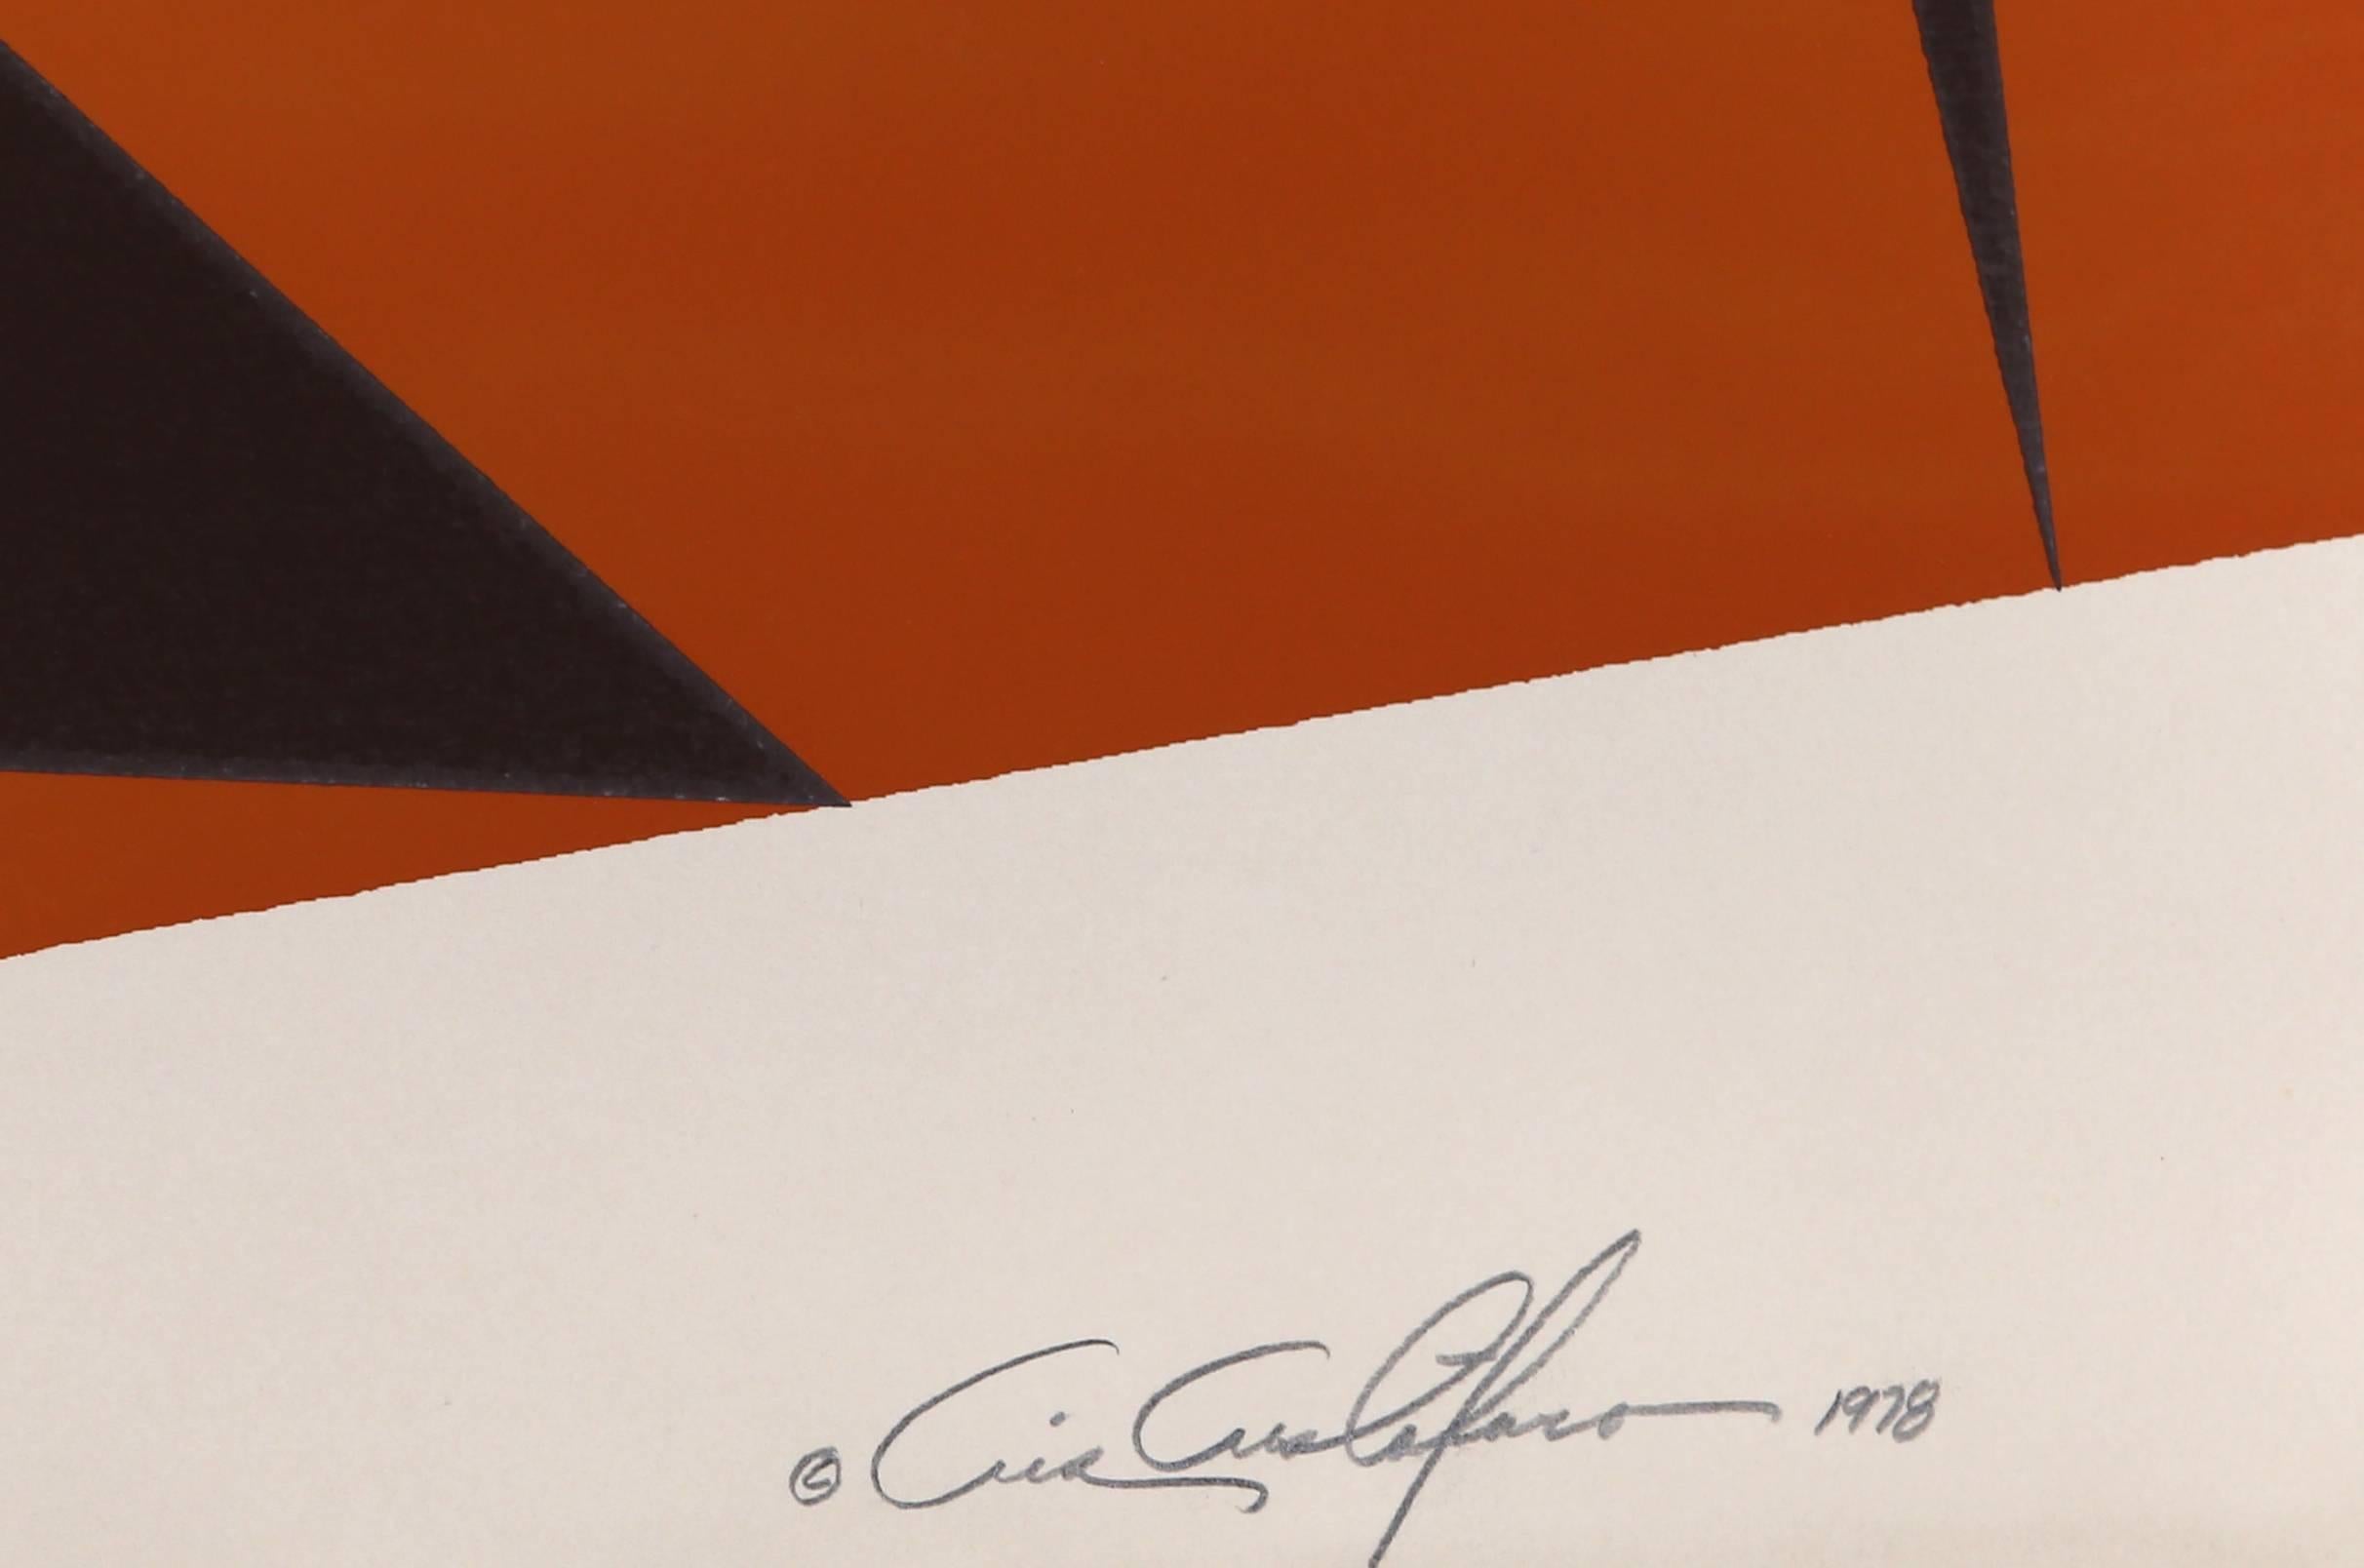 Orange Rectangles, Geometric Abstract by Cristofaro - Print by Chris Cristofaro